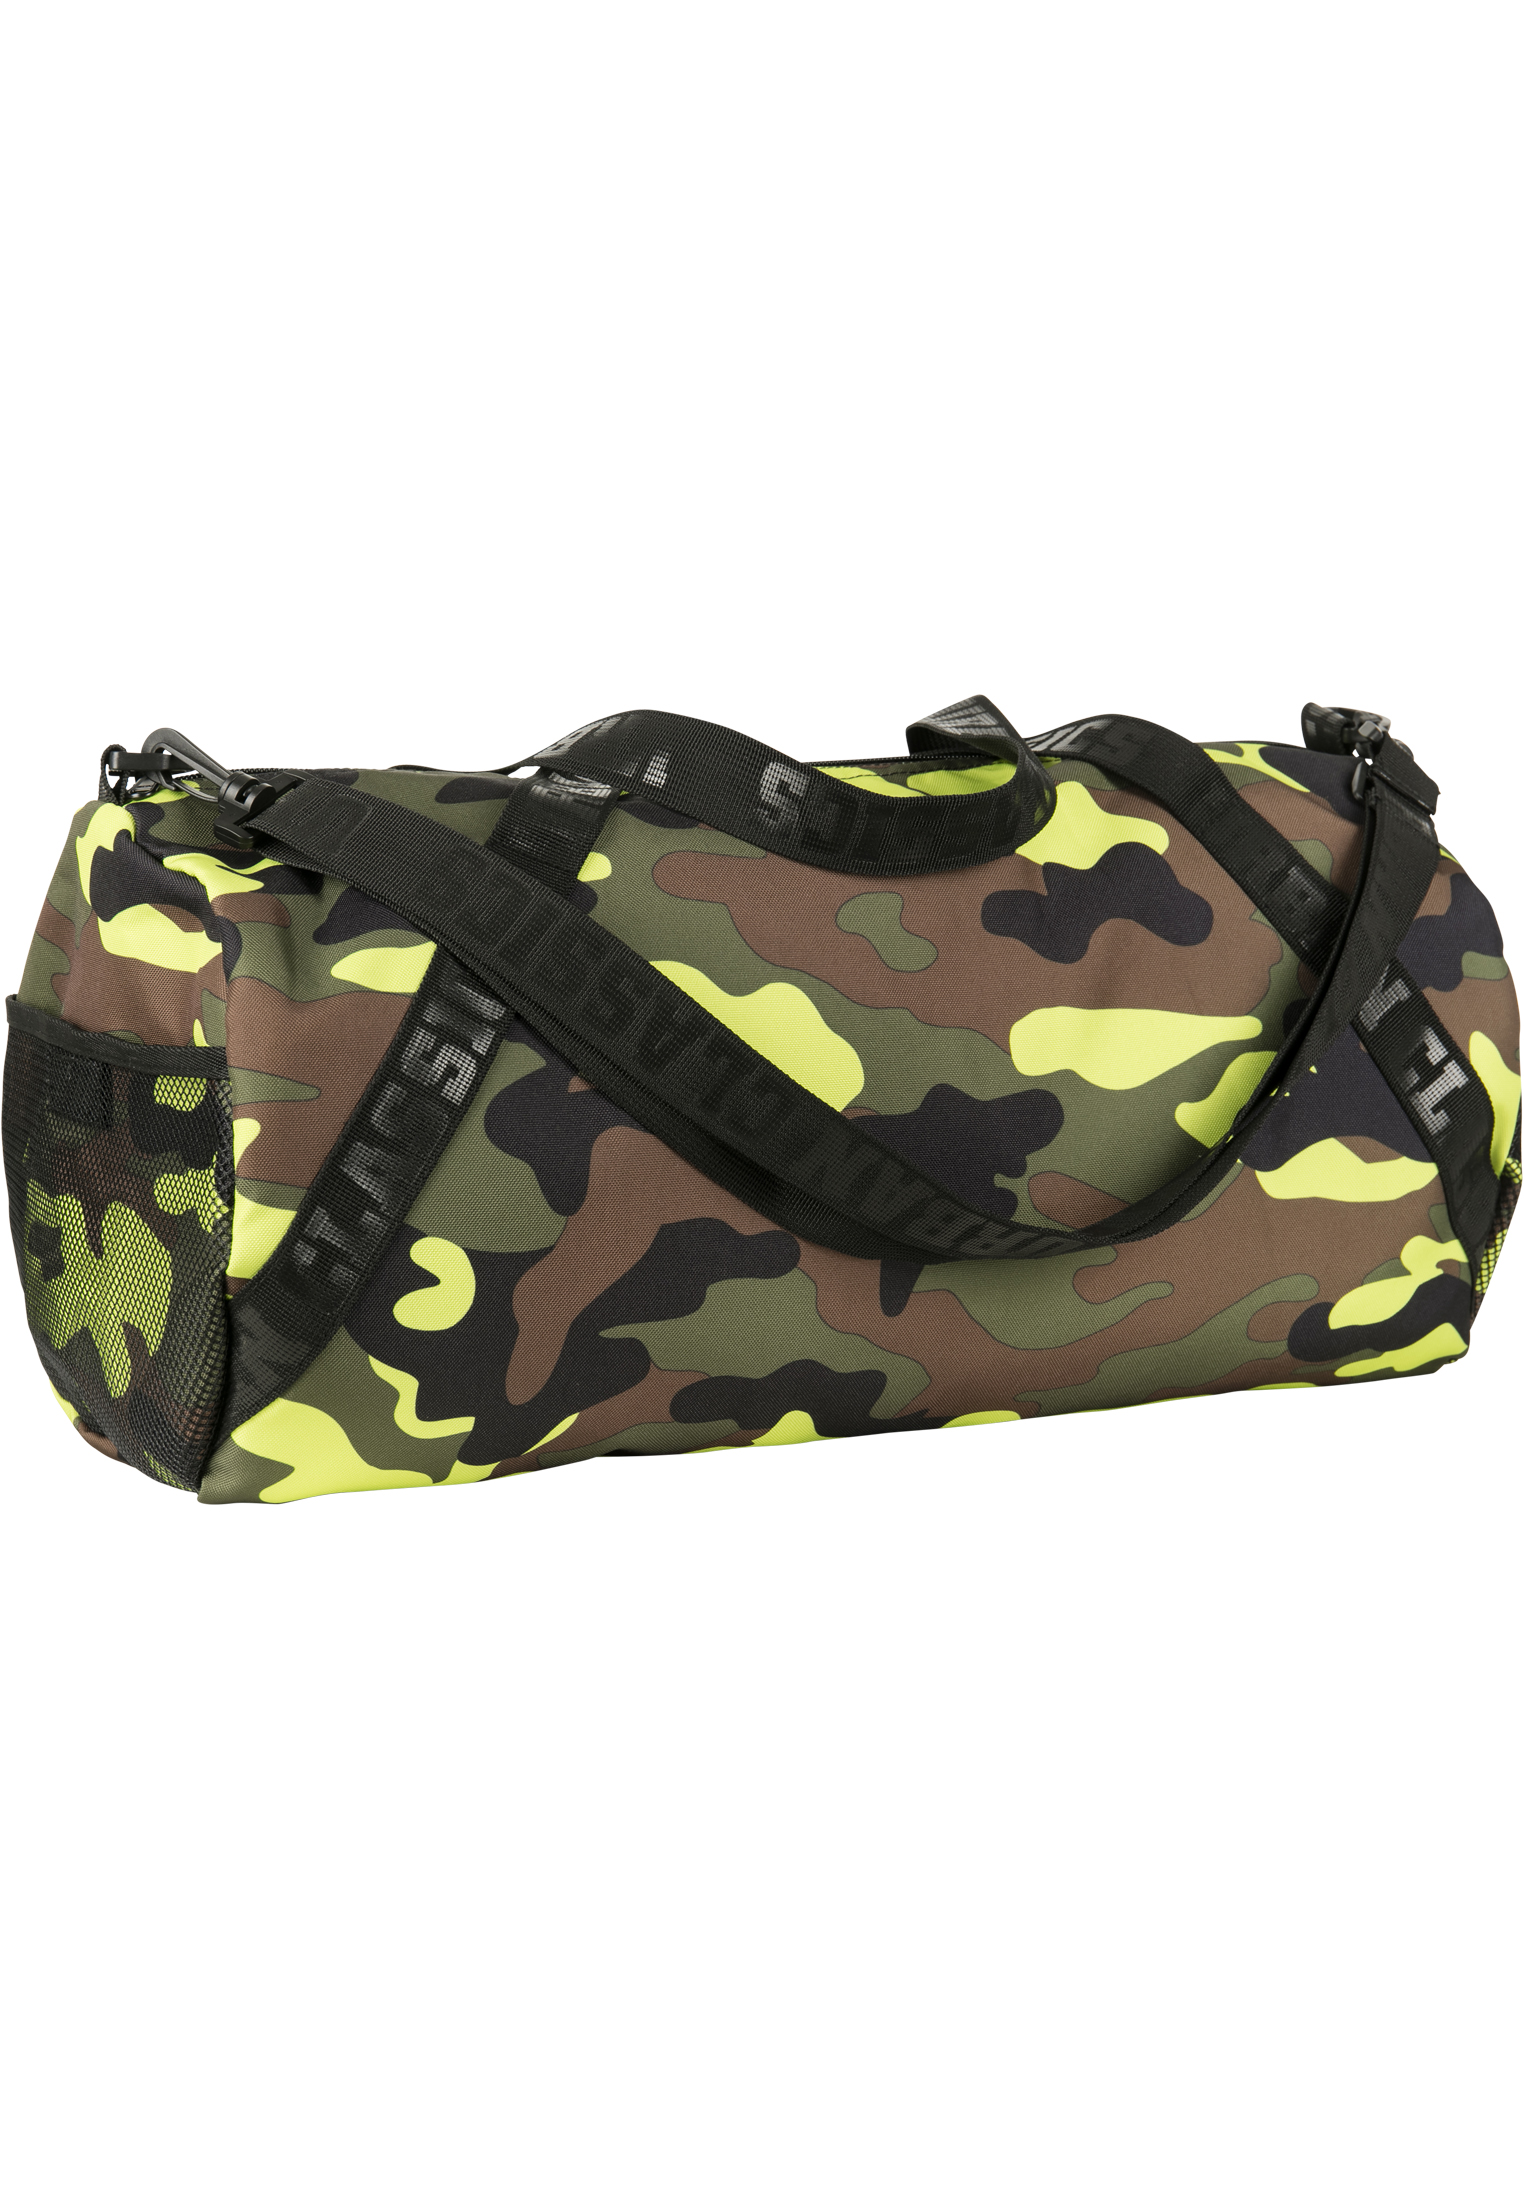 Taschen Sports Bag in Farbe frozenyellow camo